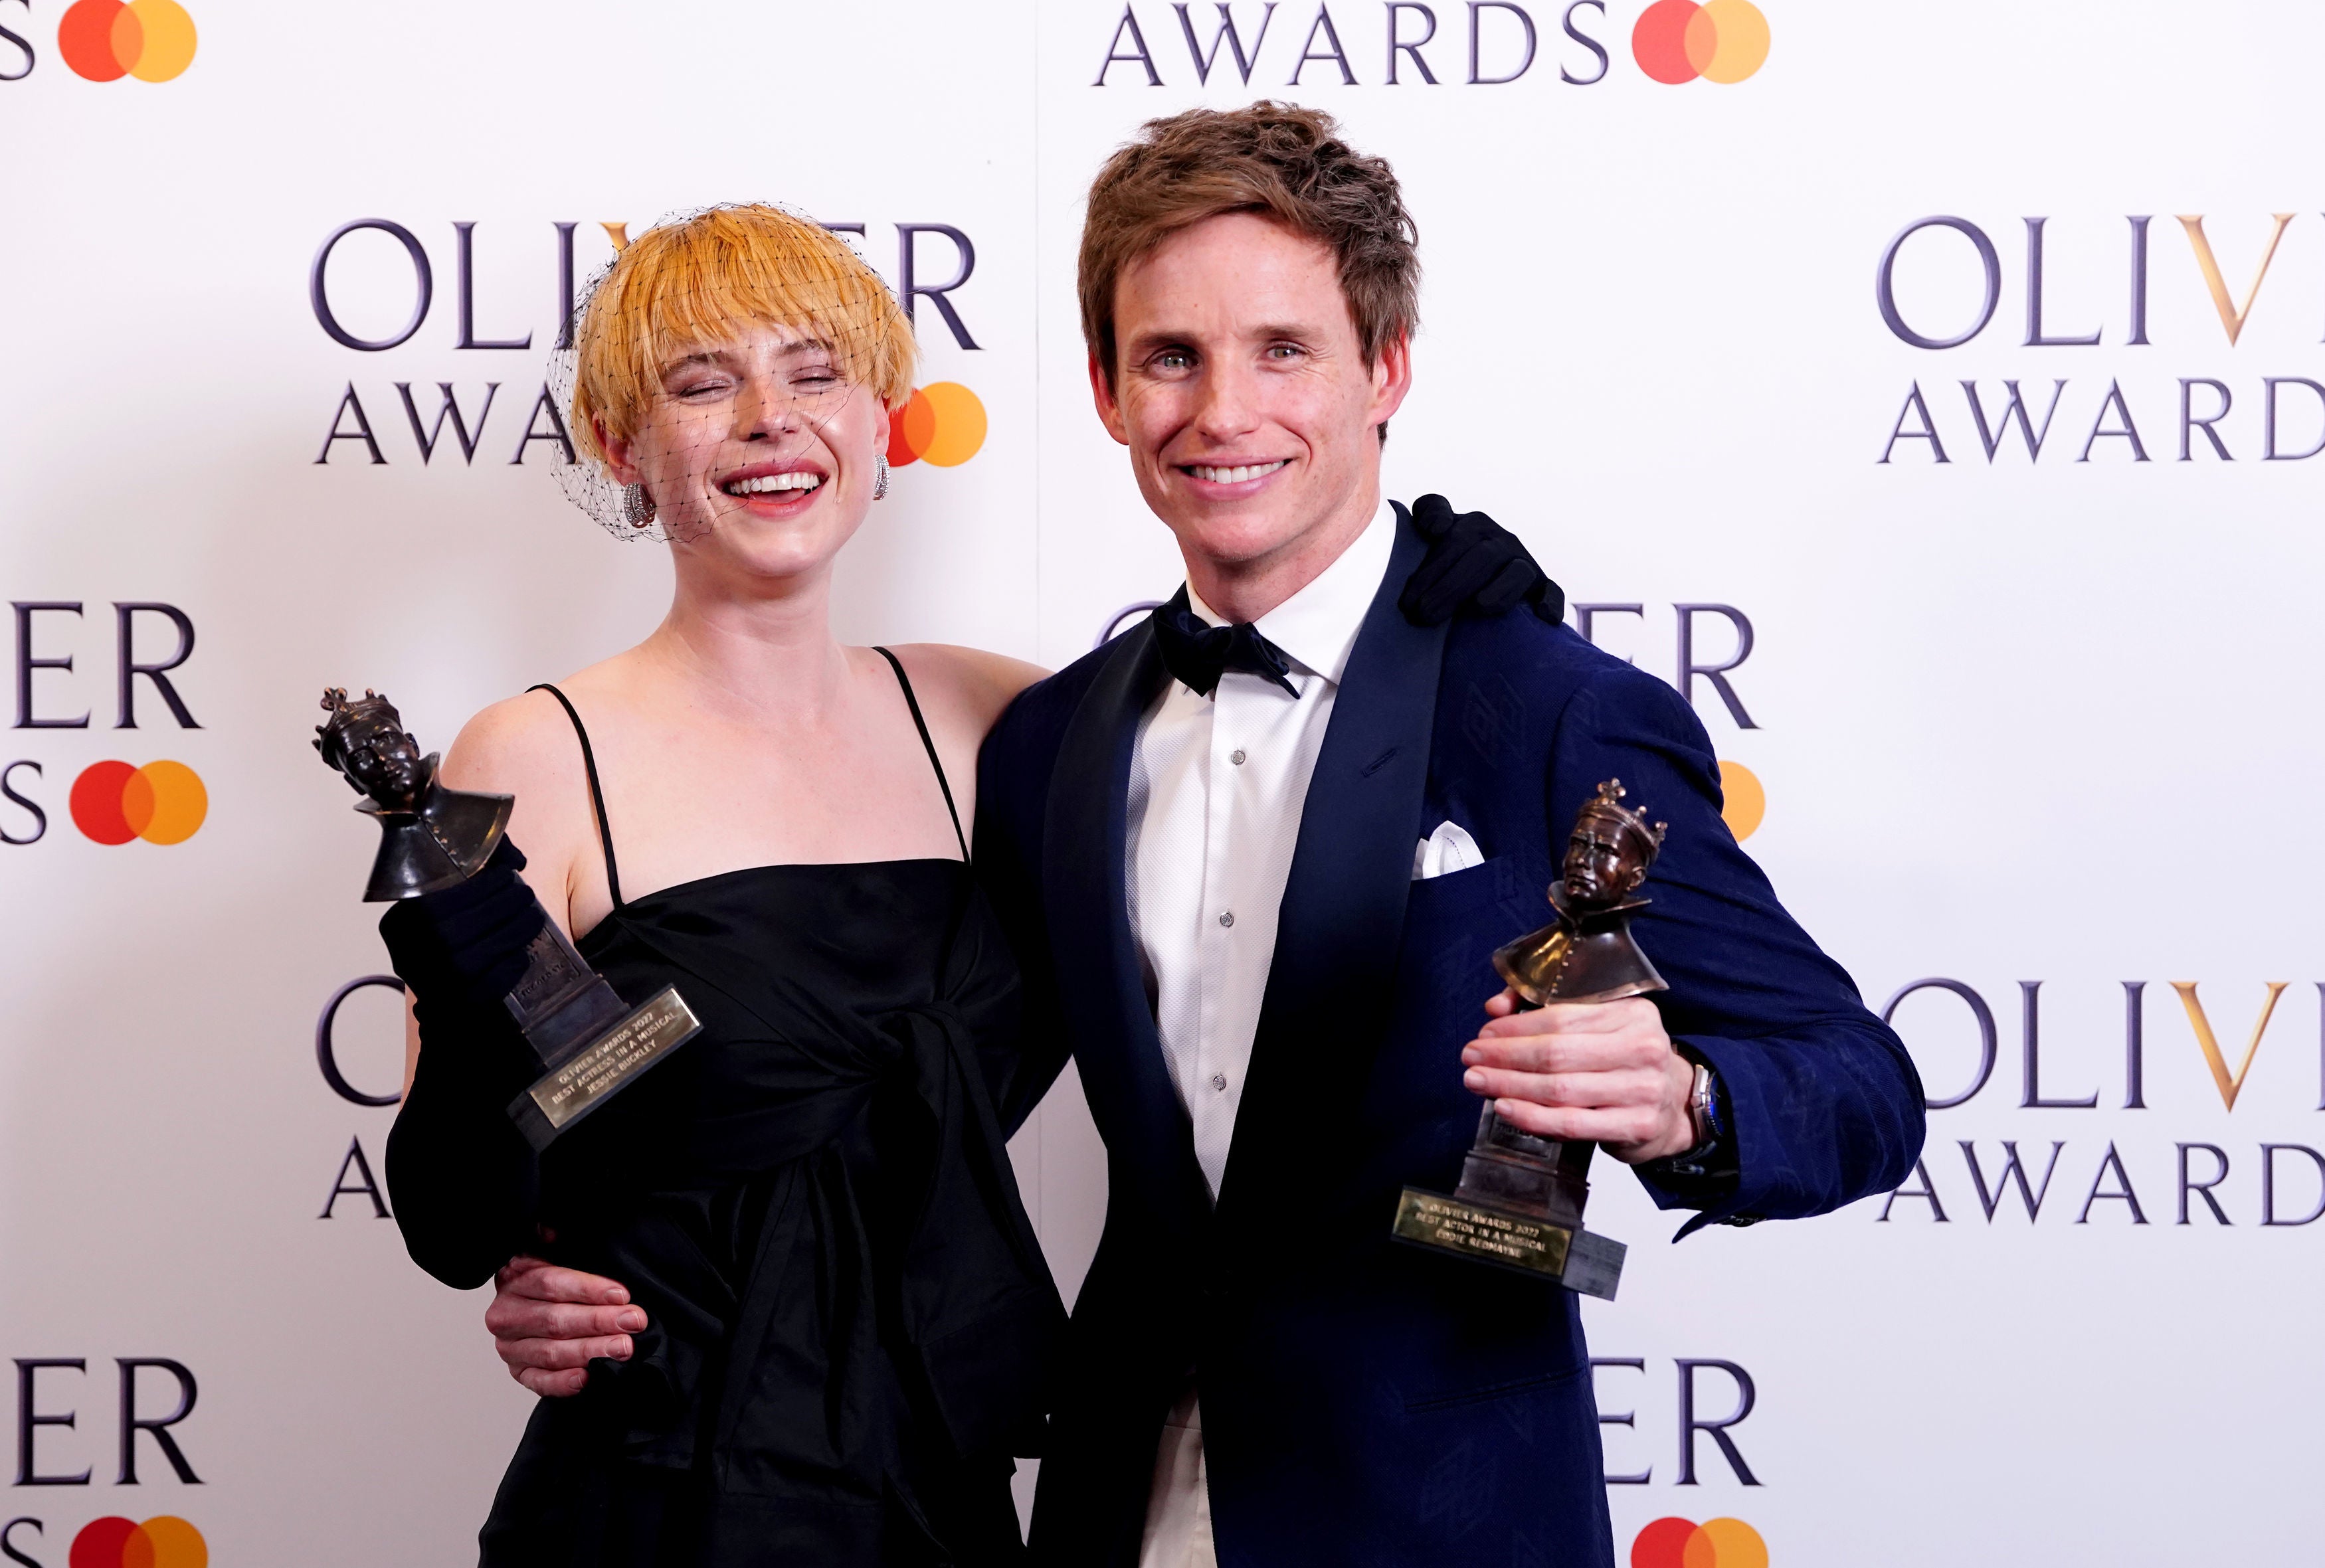 Jessie Buckley and Eddie Redmayne both won Olivier awards for their roles